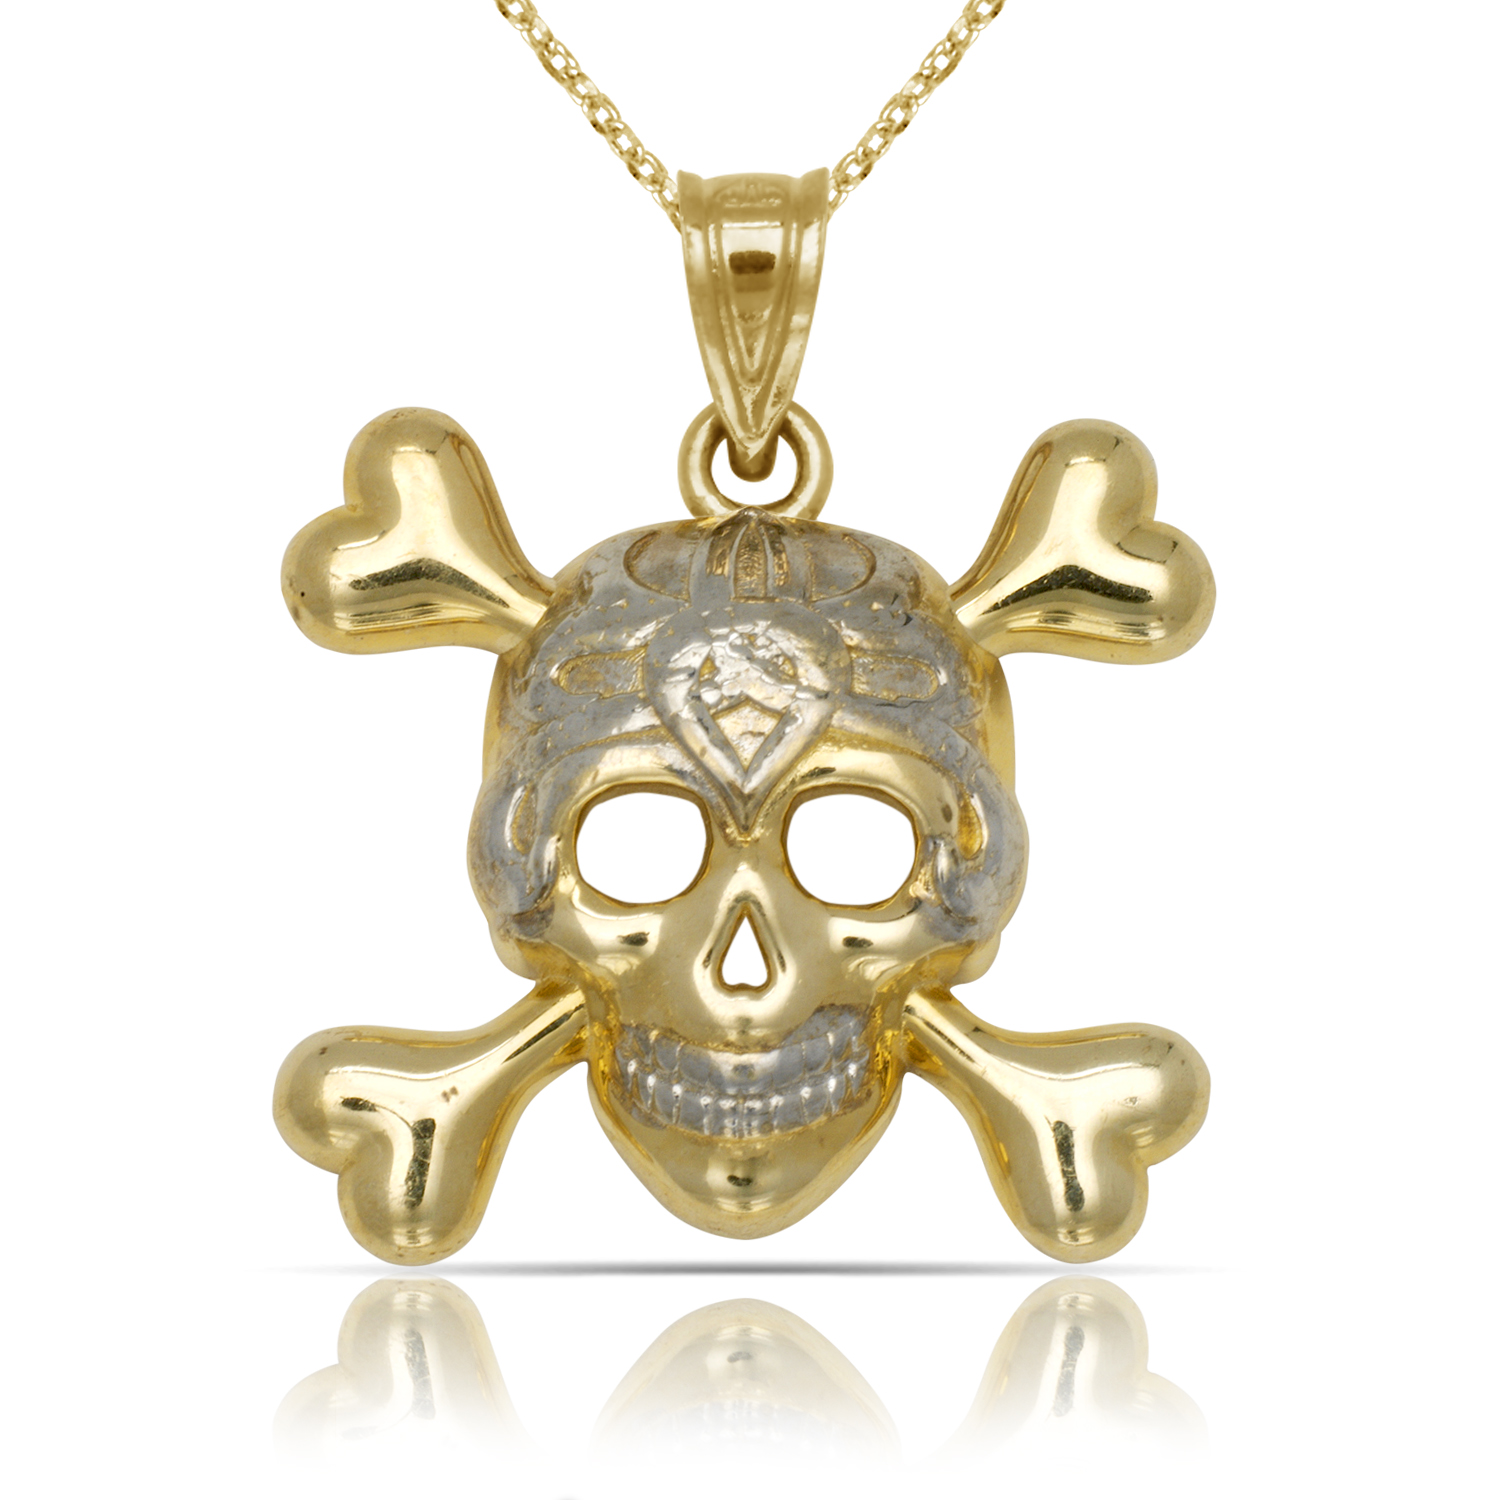 
14k Two-Tone Gold Skull and Crossbones Pendant
